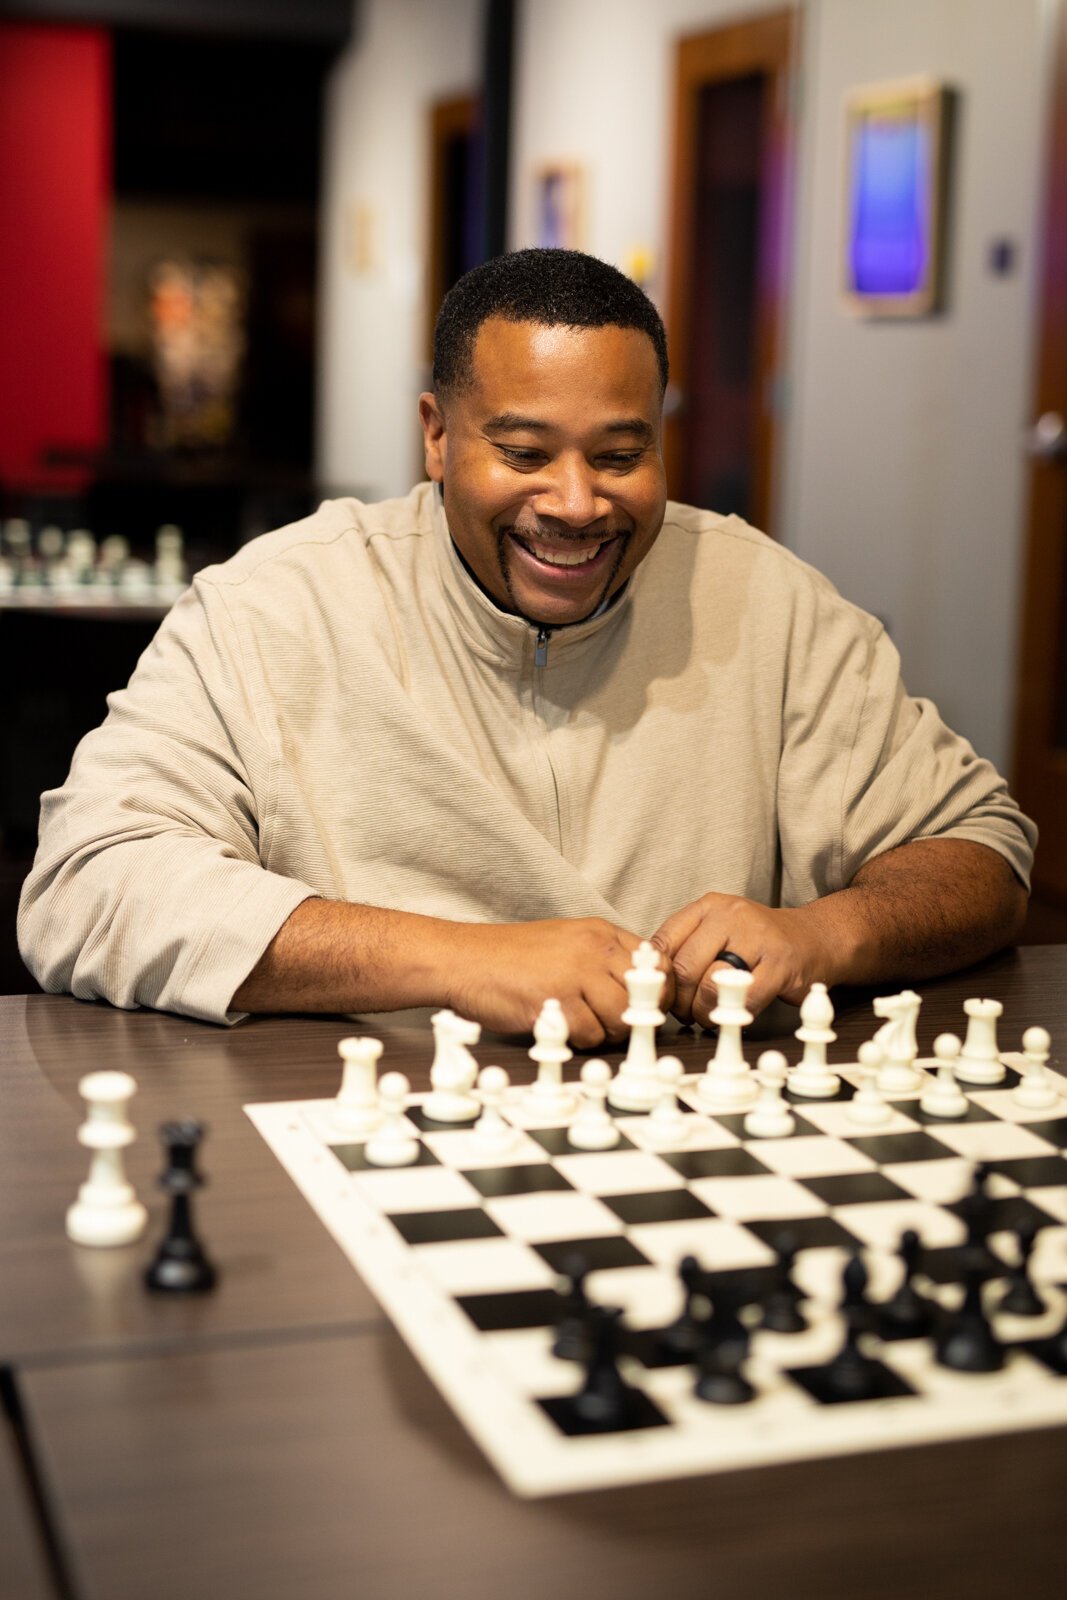 Brian Walker is Founder of the TakeaStan ChessClub in Fort Wayne.